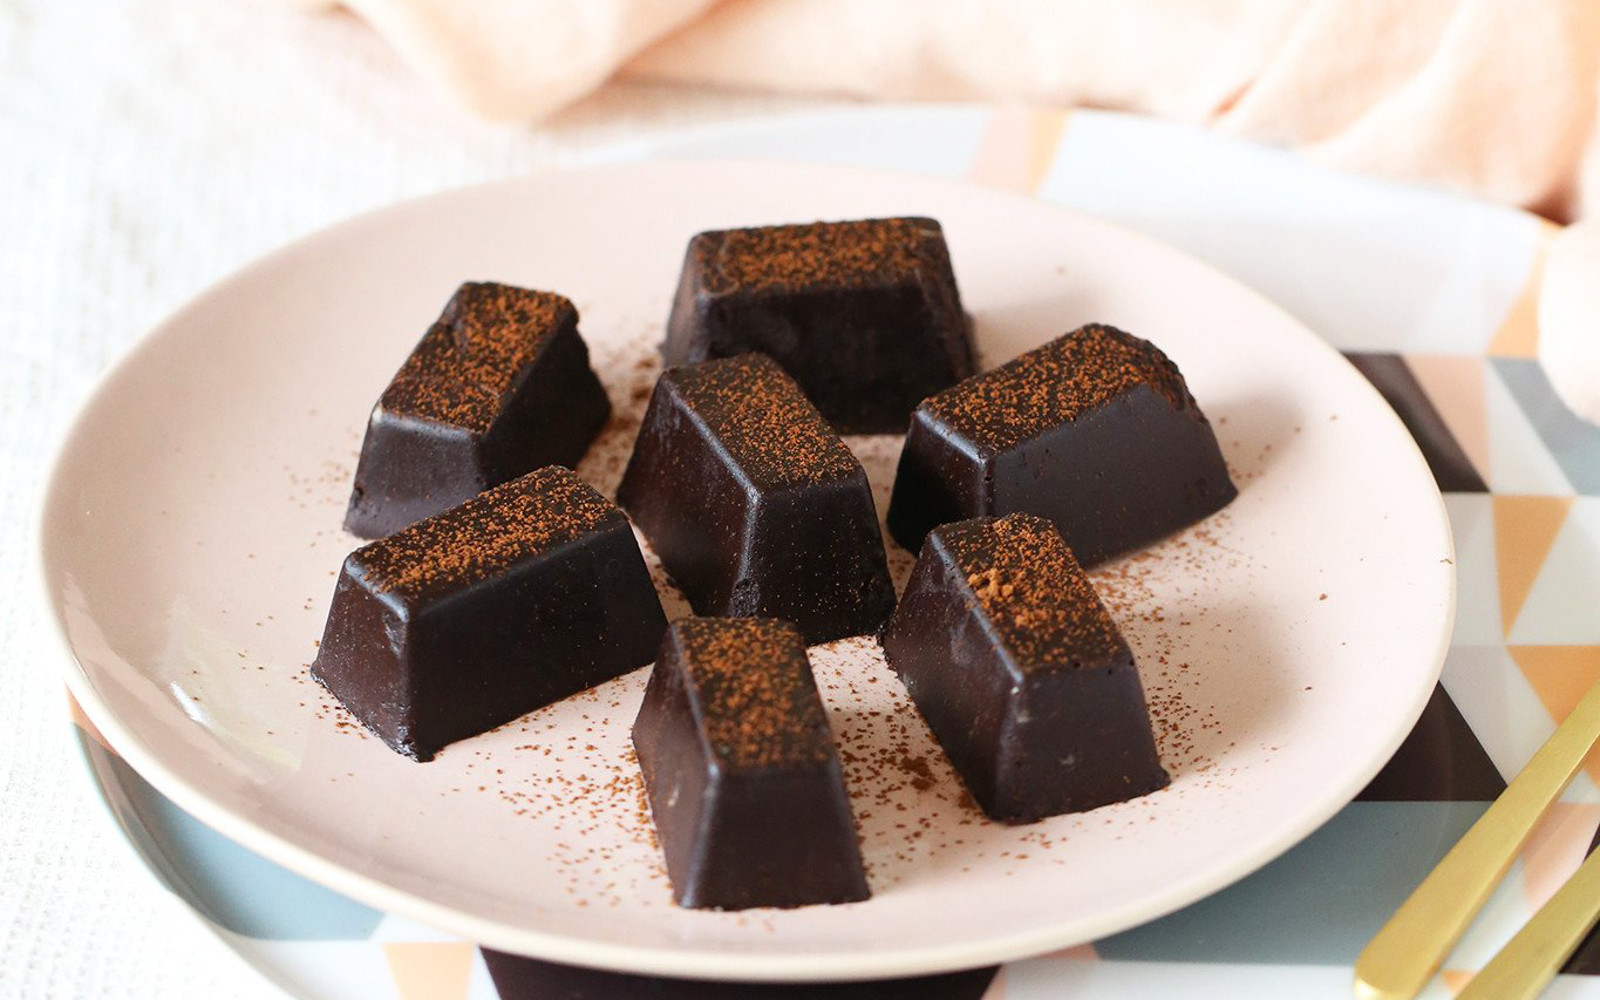 5-ingredient chocolate fondant in 5 minutes